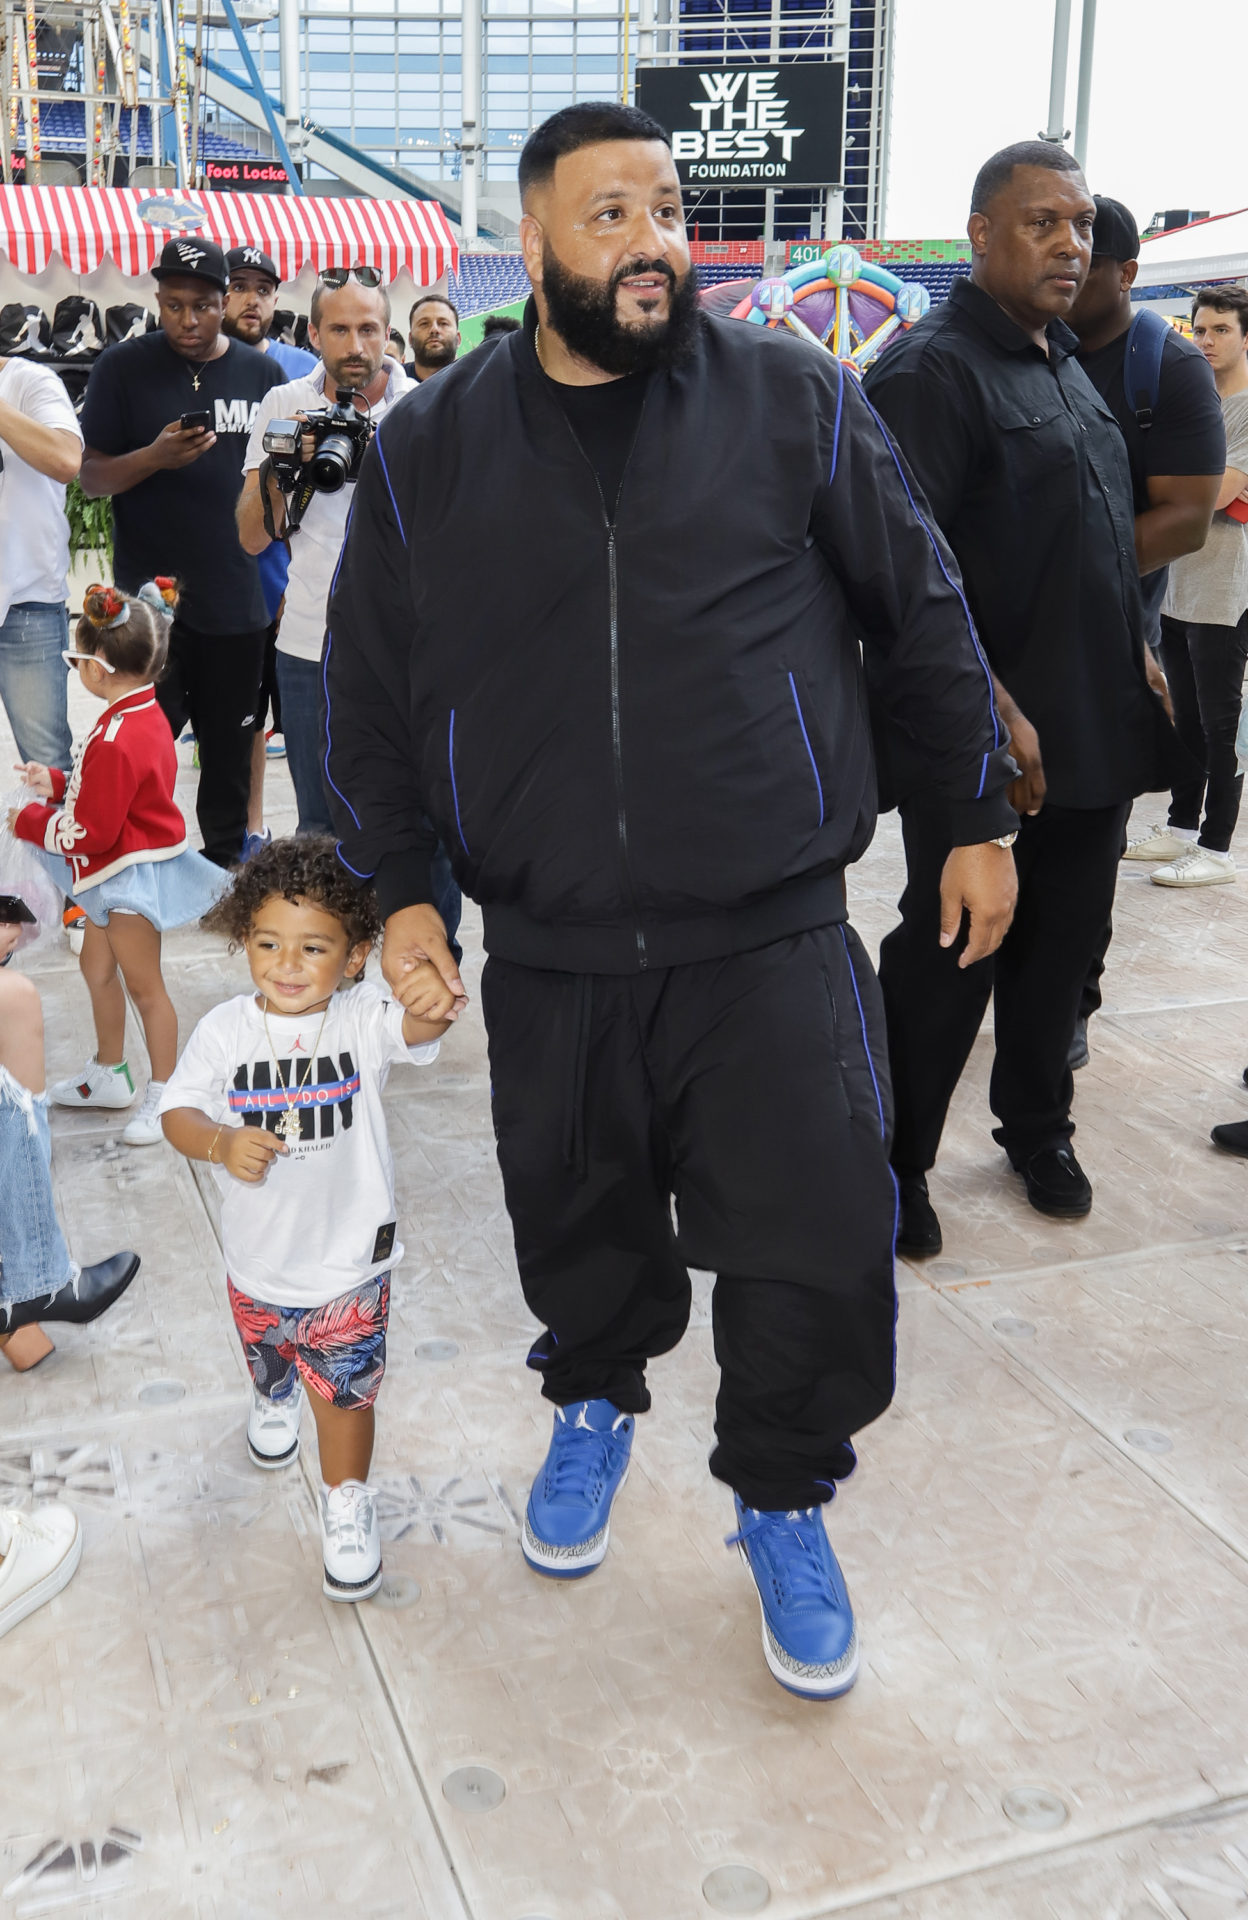 DJ KHALED holding his kid's hand